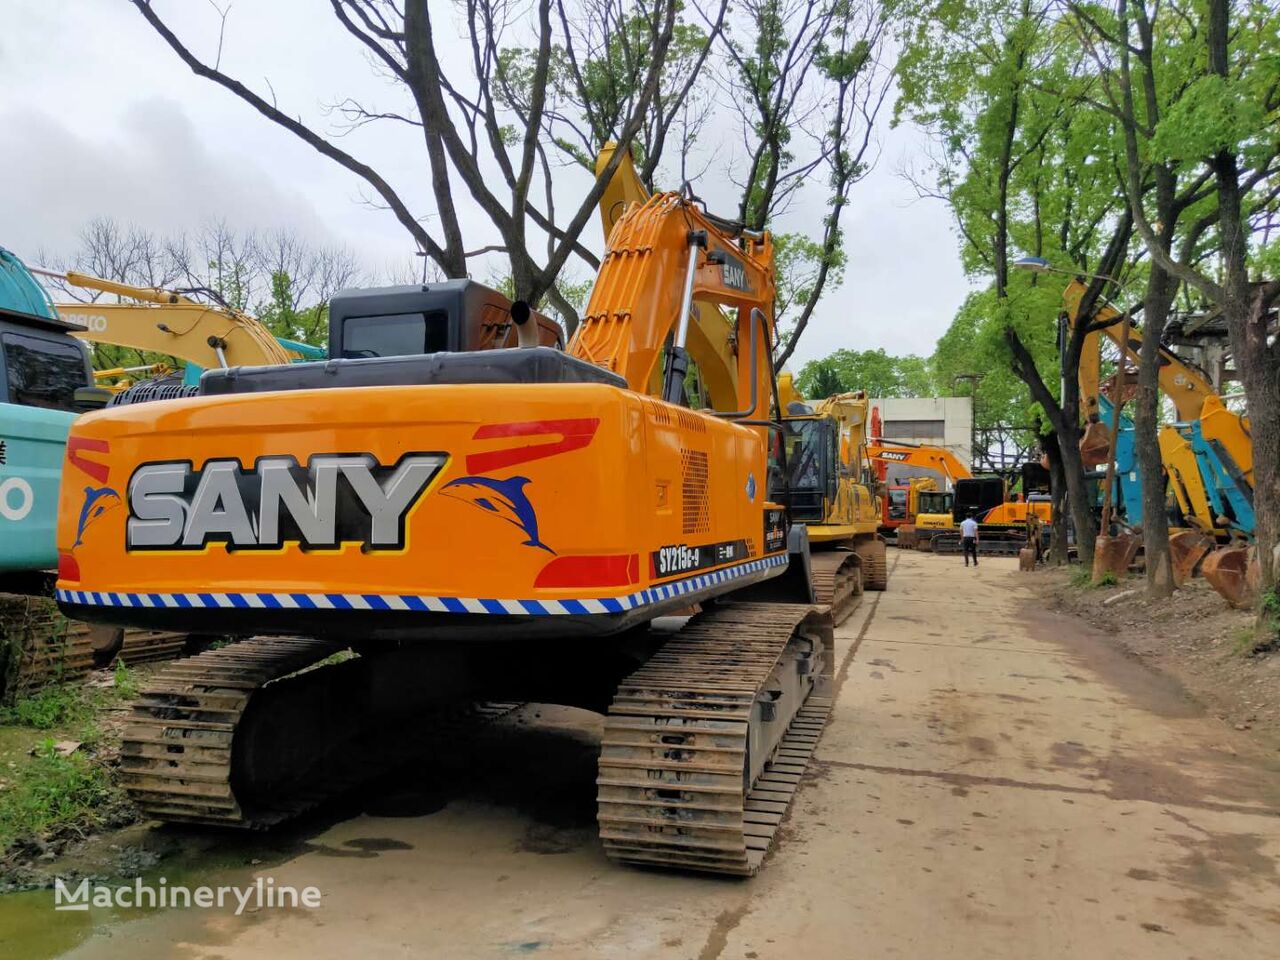 Sany SY215-9 tracked excavator